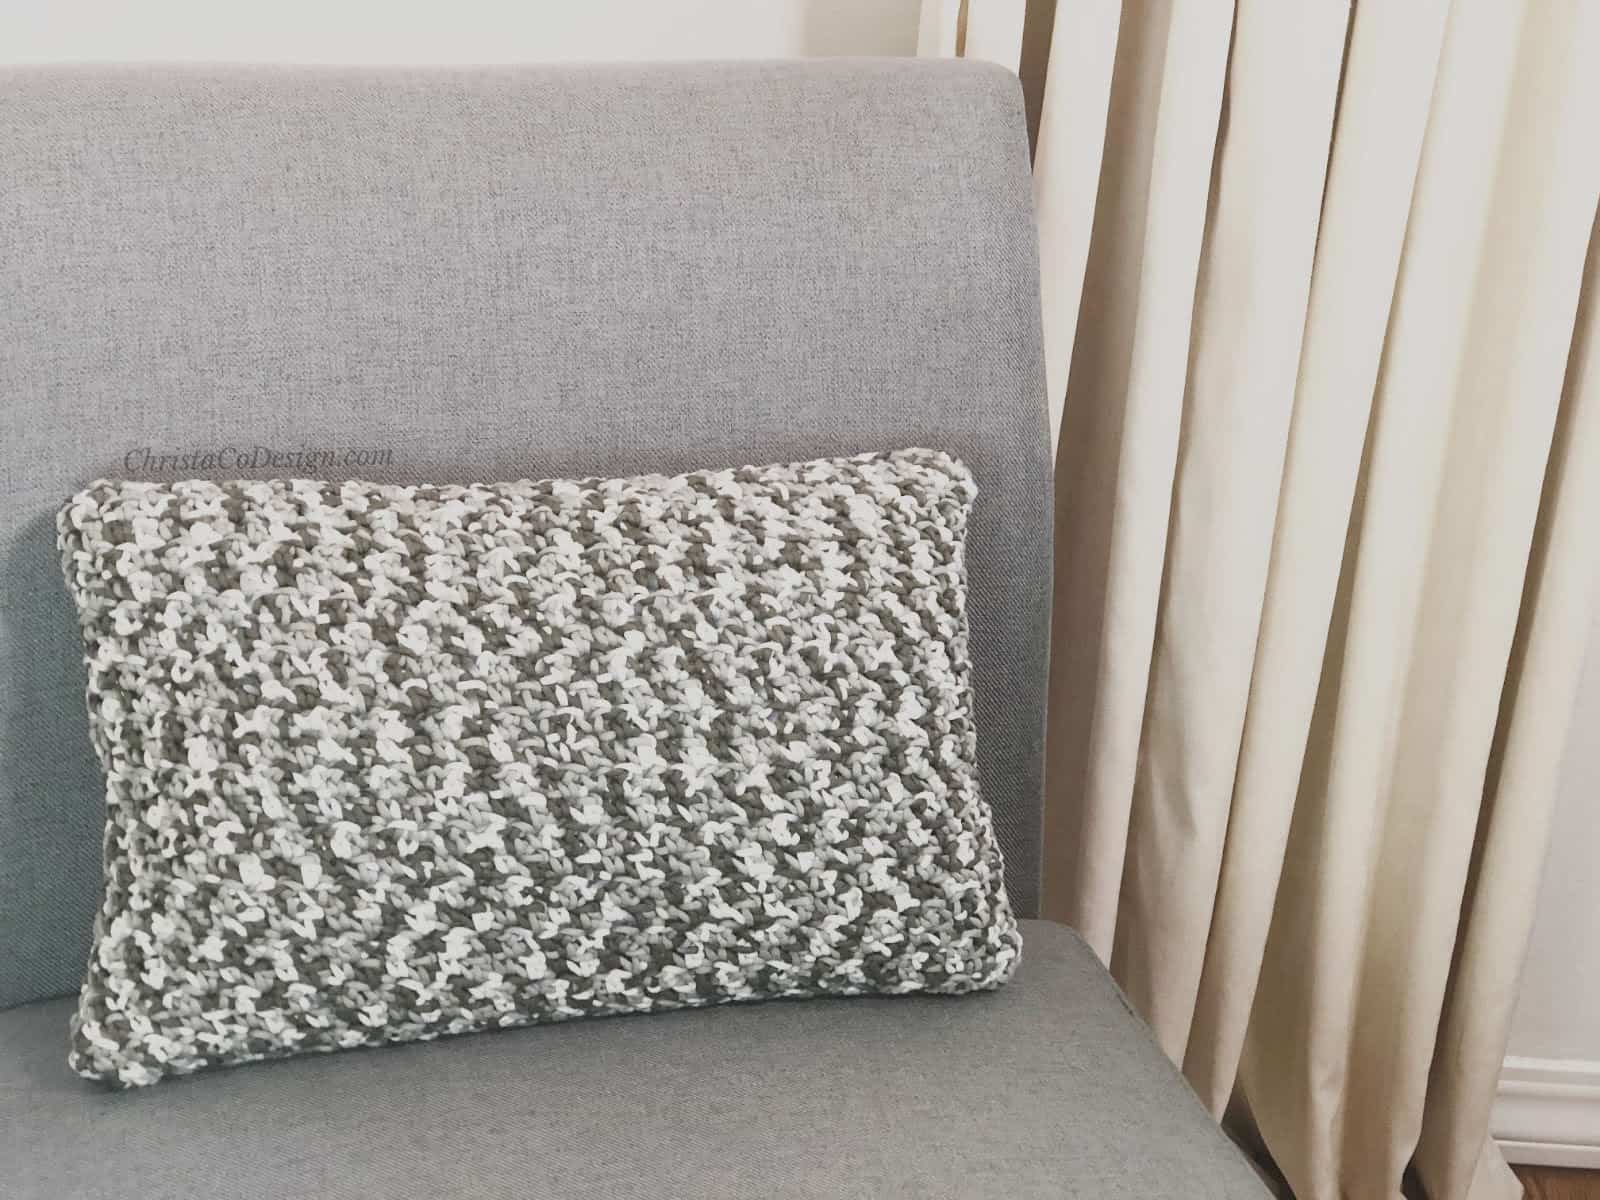 Lombardy Pillow a Free Crochet Pillow Pattern